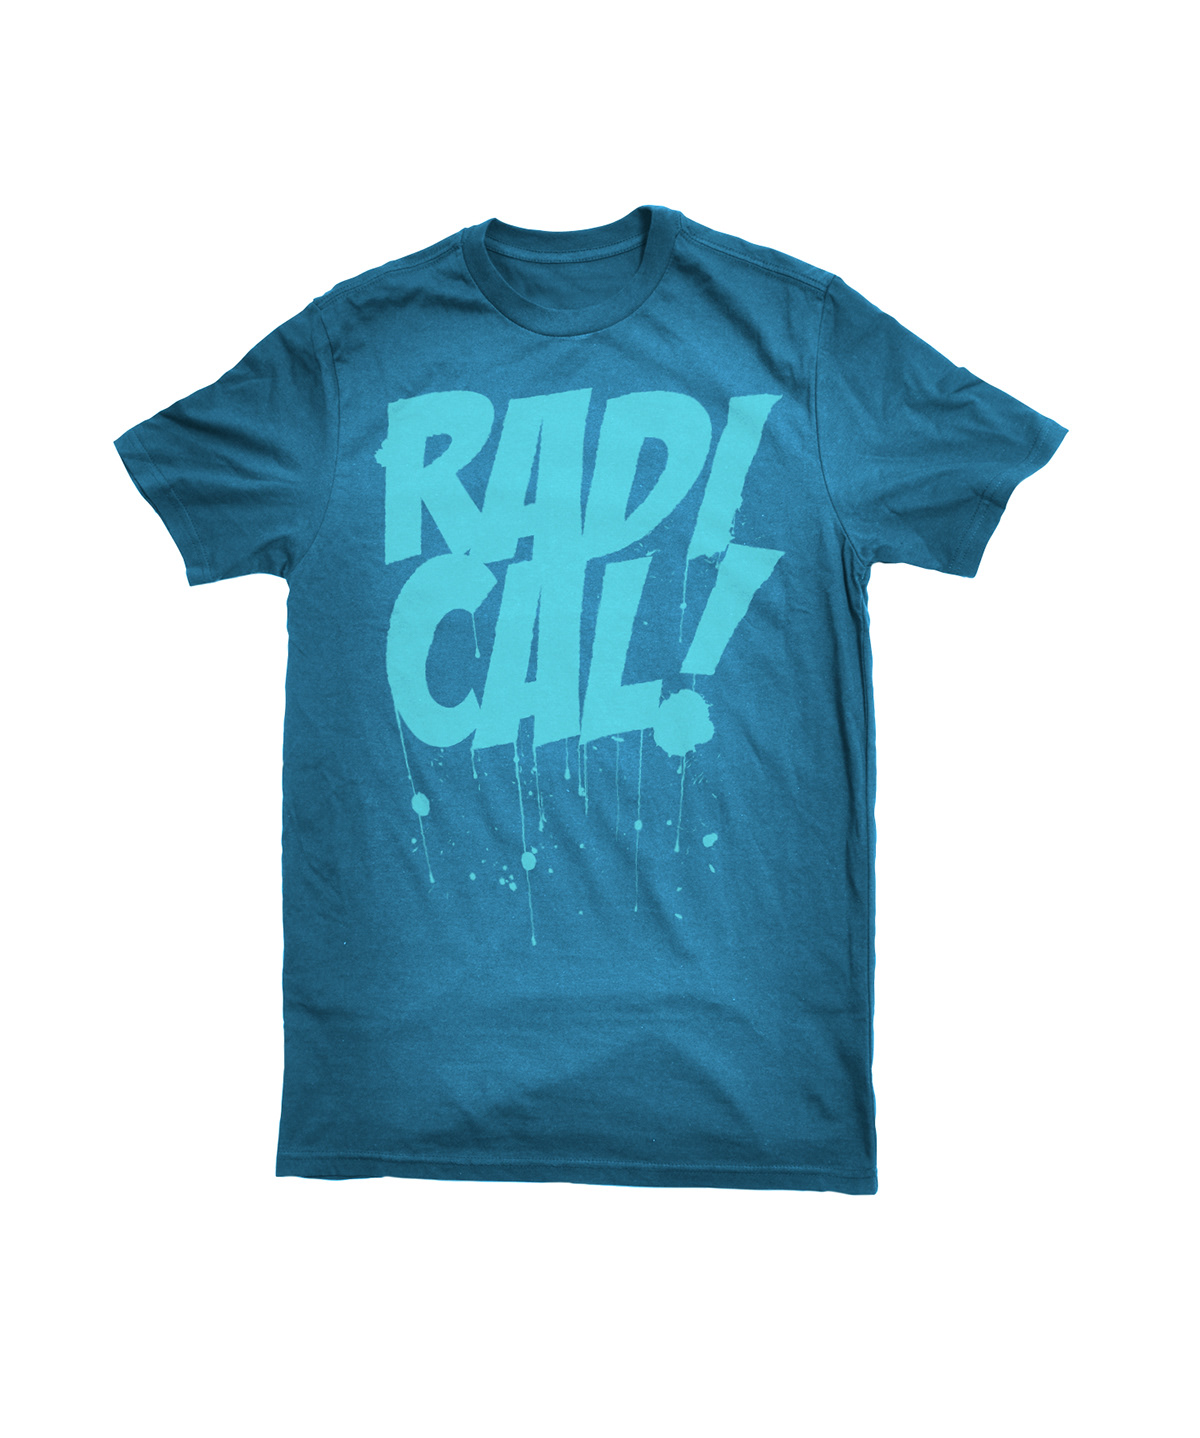 t-shirt awesome bodacious radical